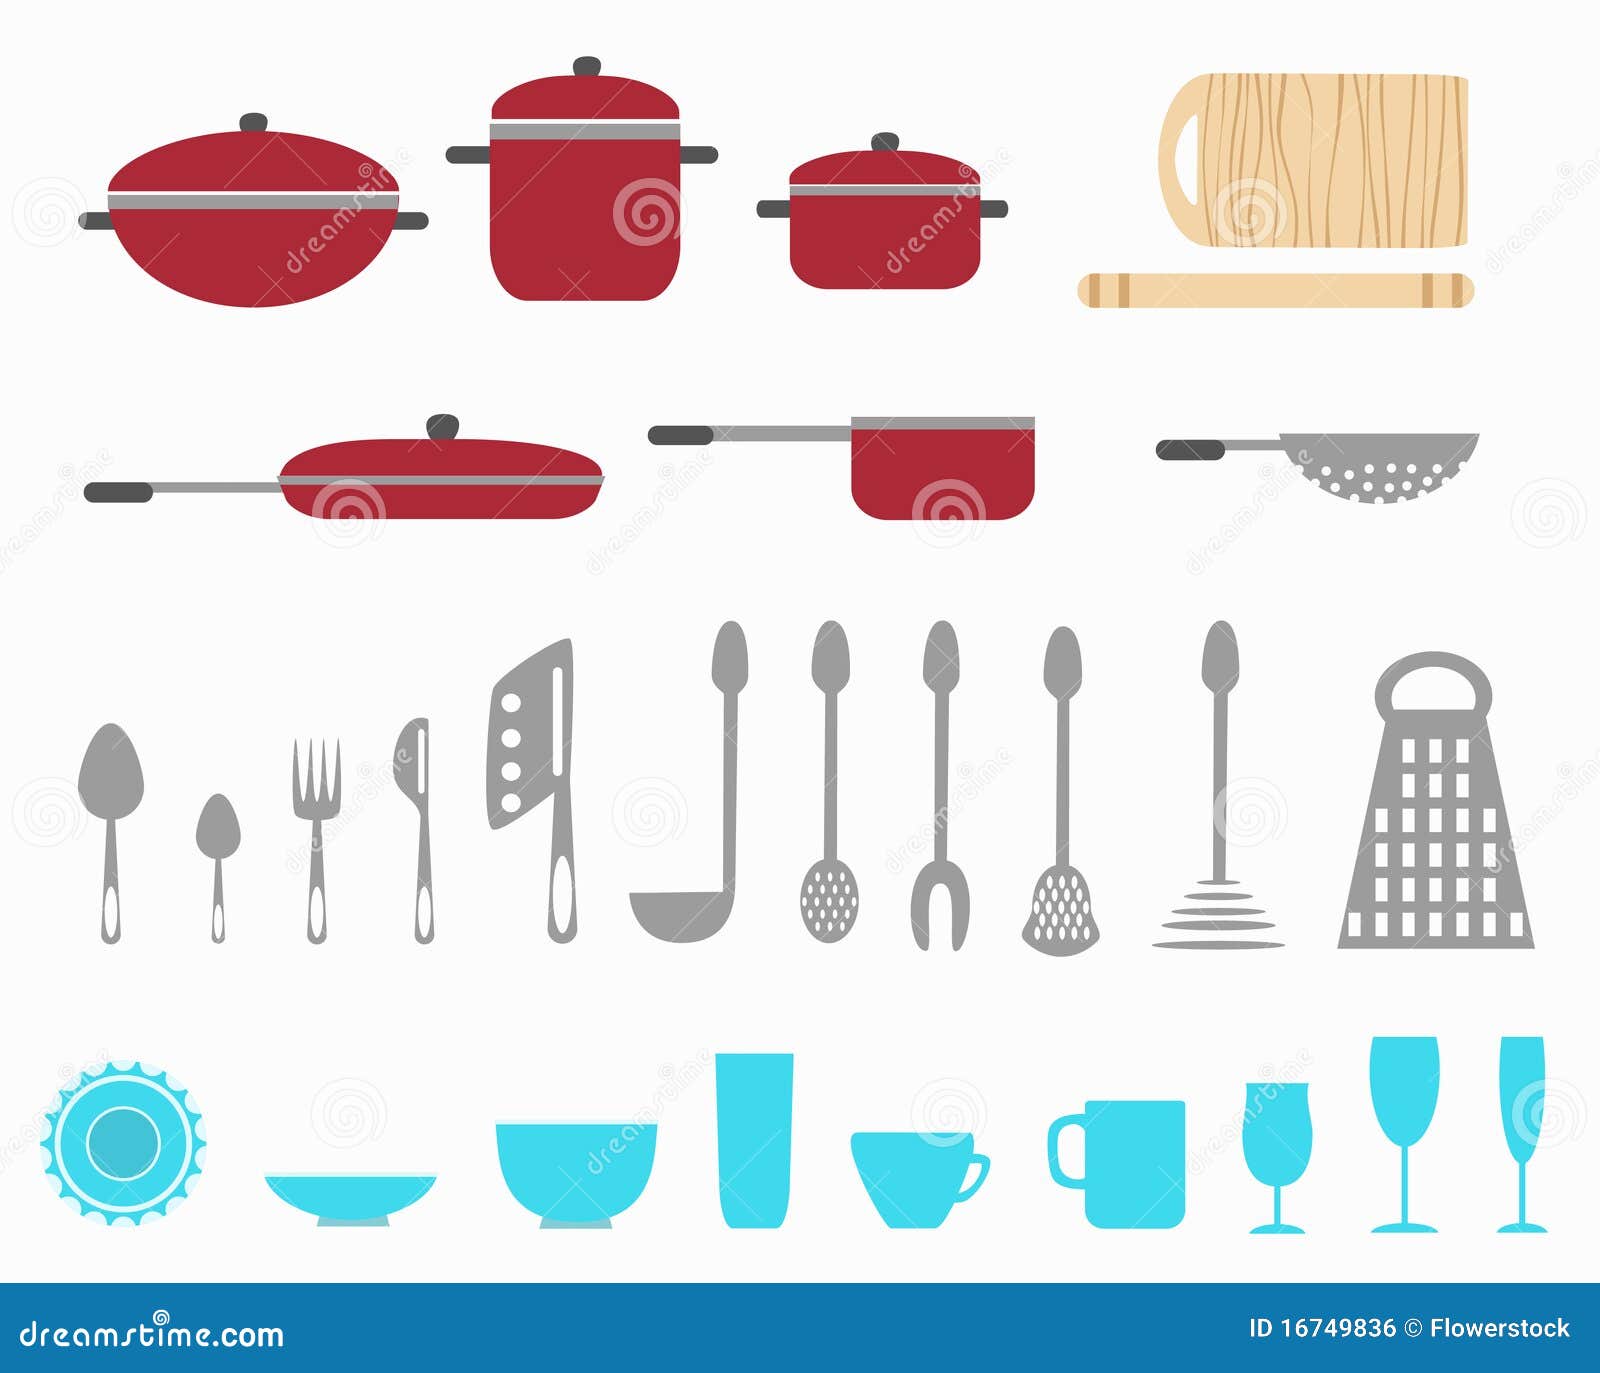 cooking materials cartoon